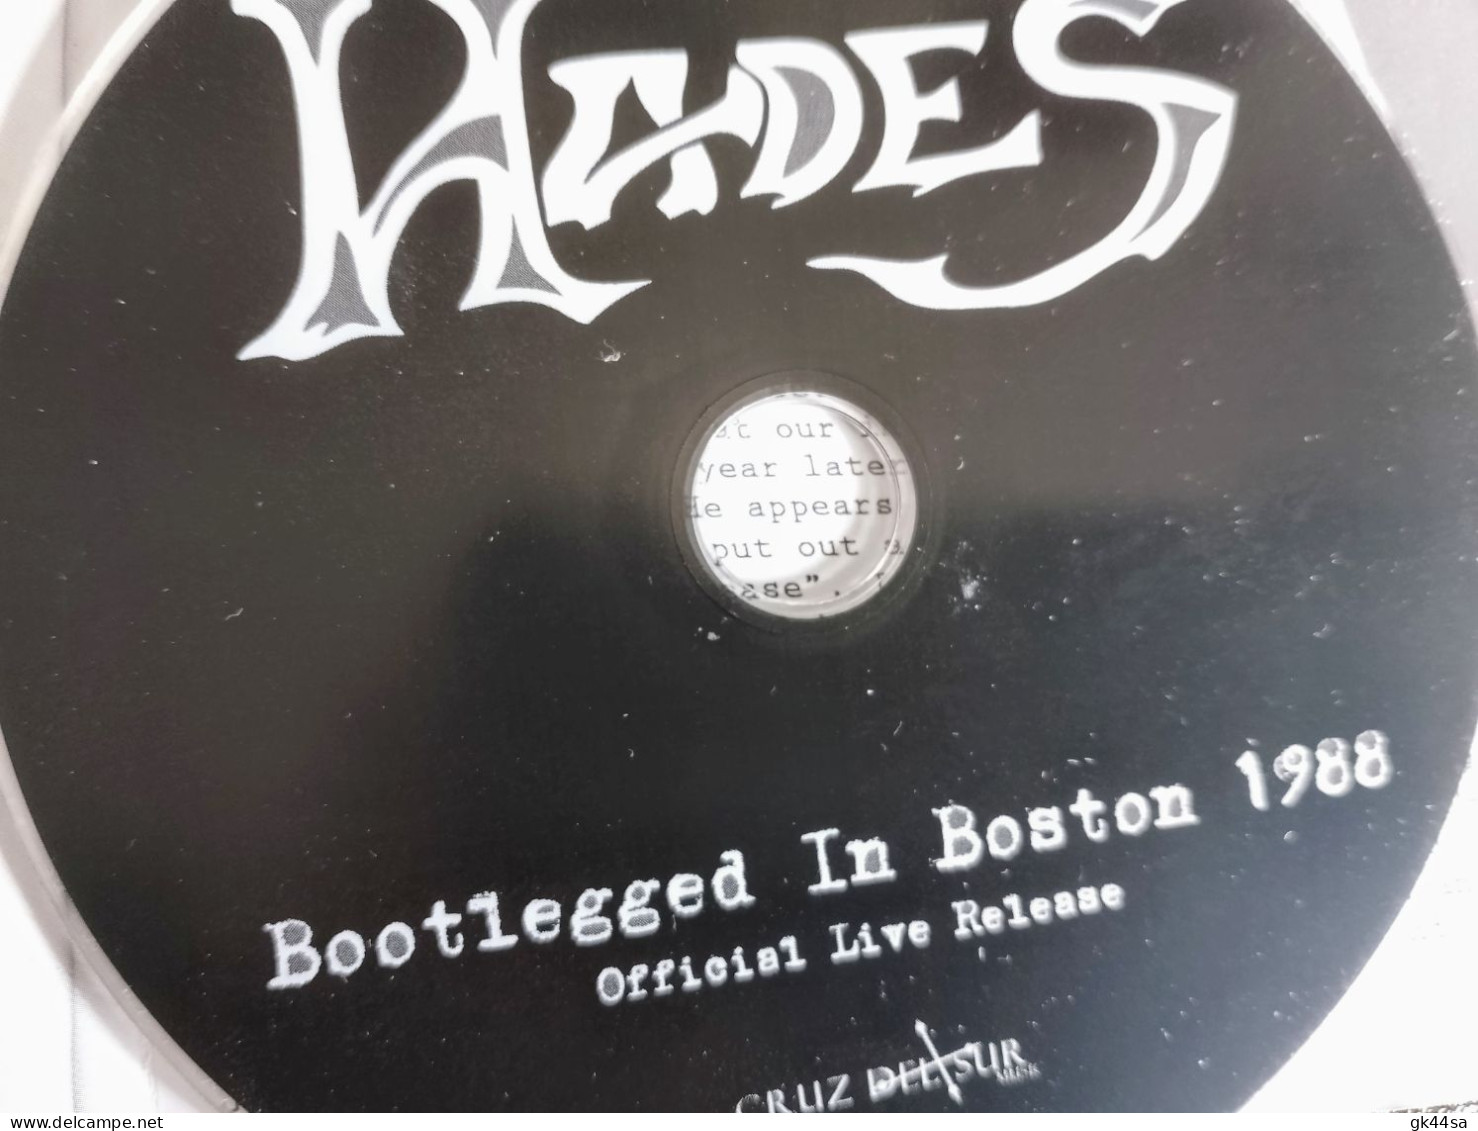 HADES - BOOTLEGGED IN BOSTON 1988 - OFFICIAL LIVE RELEASE - DVD - Muziek DVD's